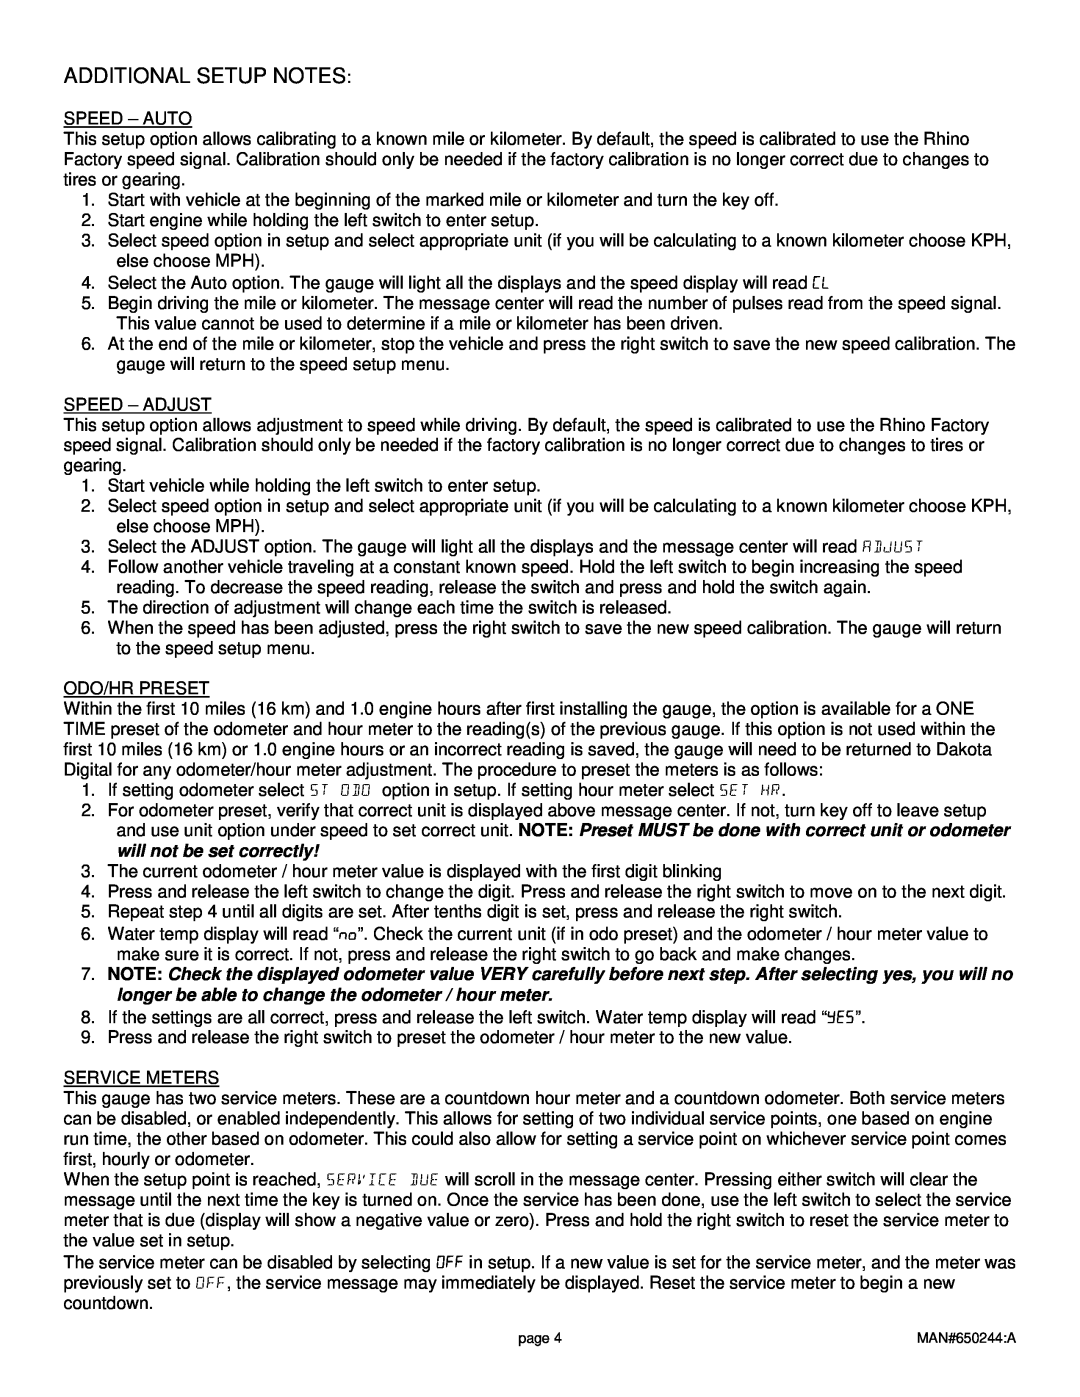 Dakota Digital UTV-1200 manual Additional Setup Notes 